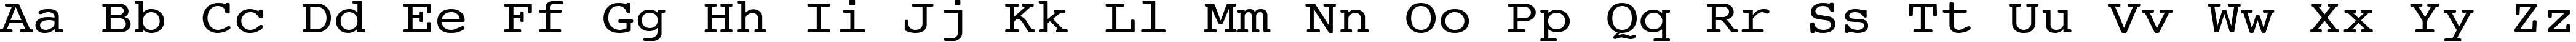 Пример написания английского алфавита шрифтом NTCourierVK Normal110n